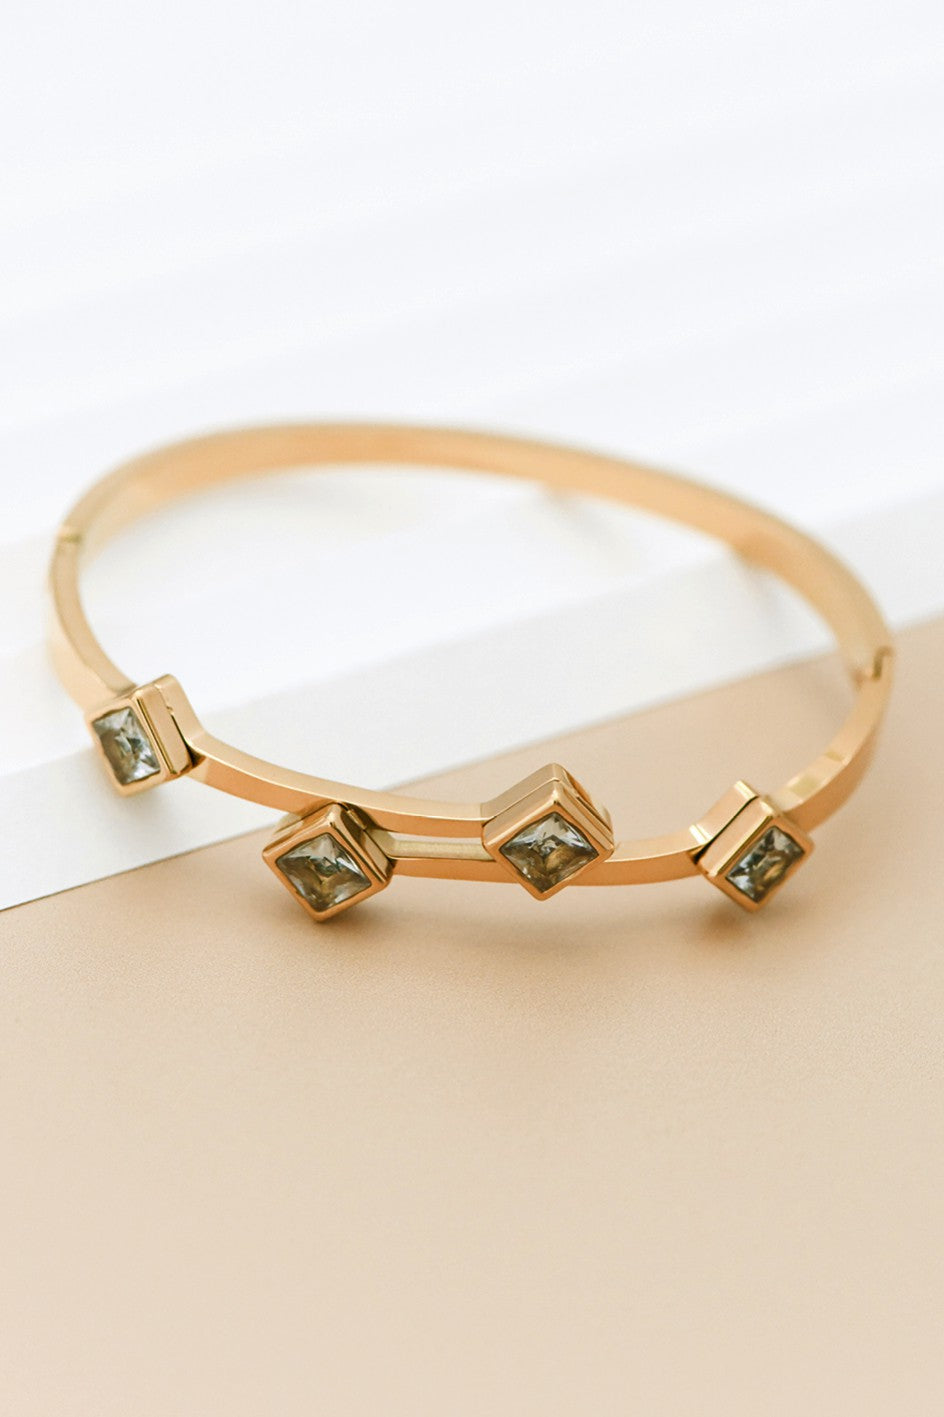 18k Gold cuff bracelet